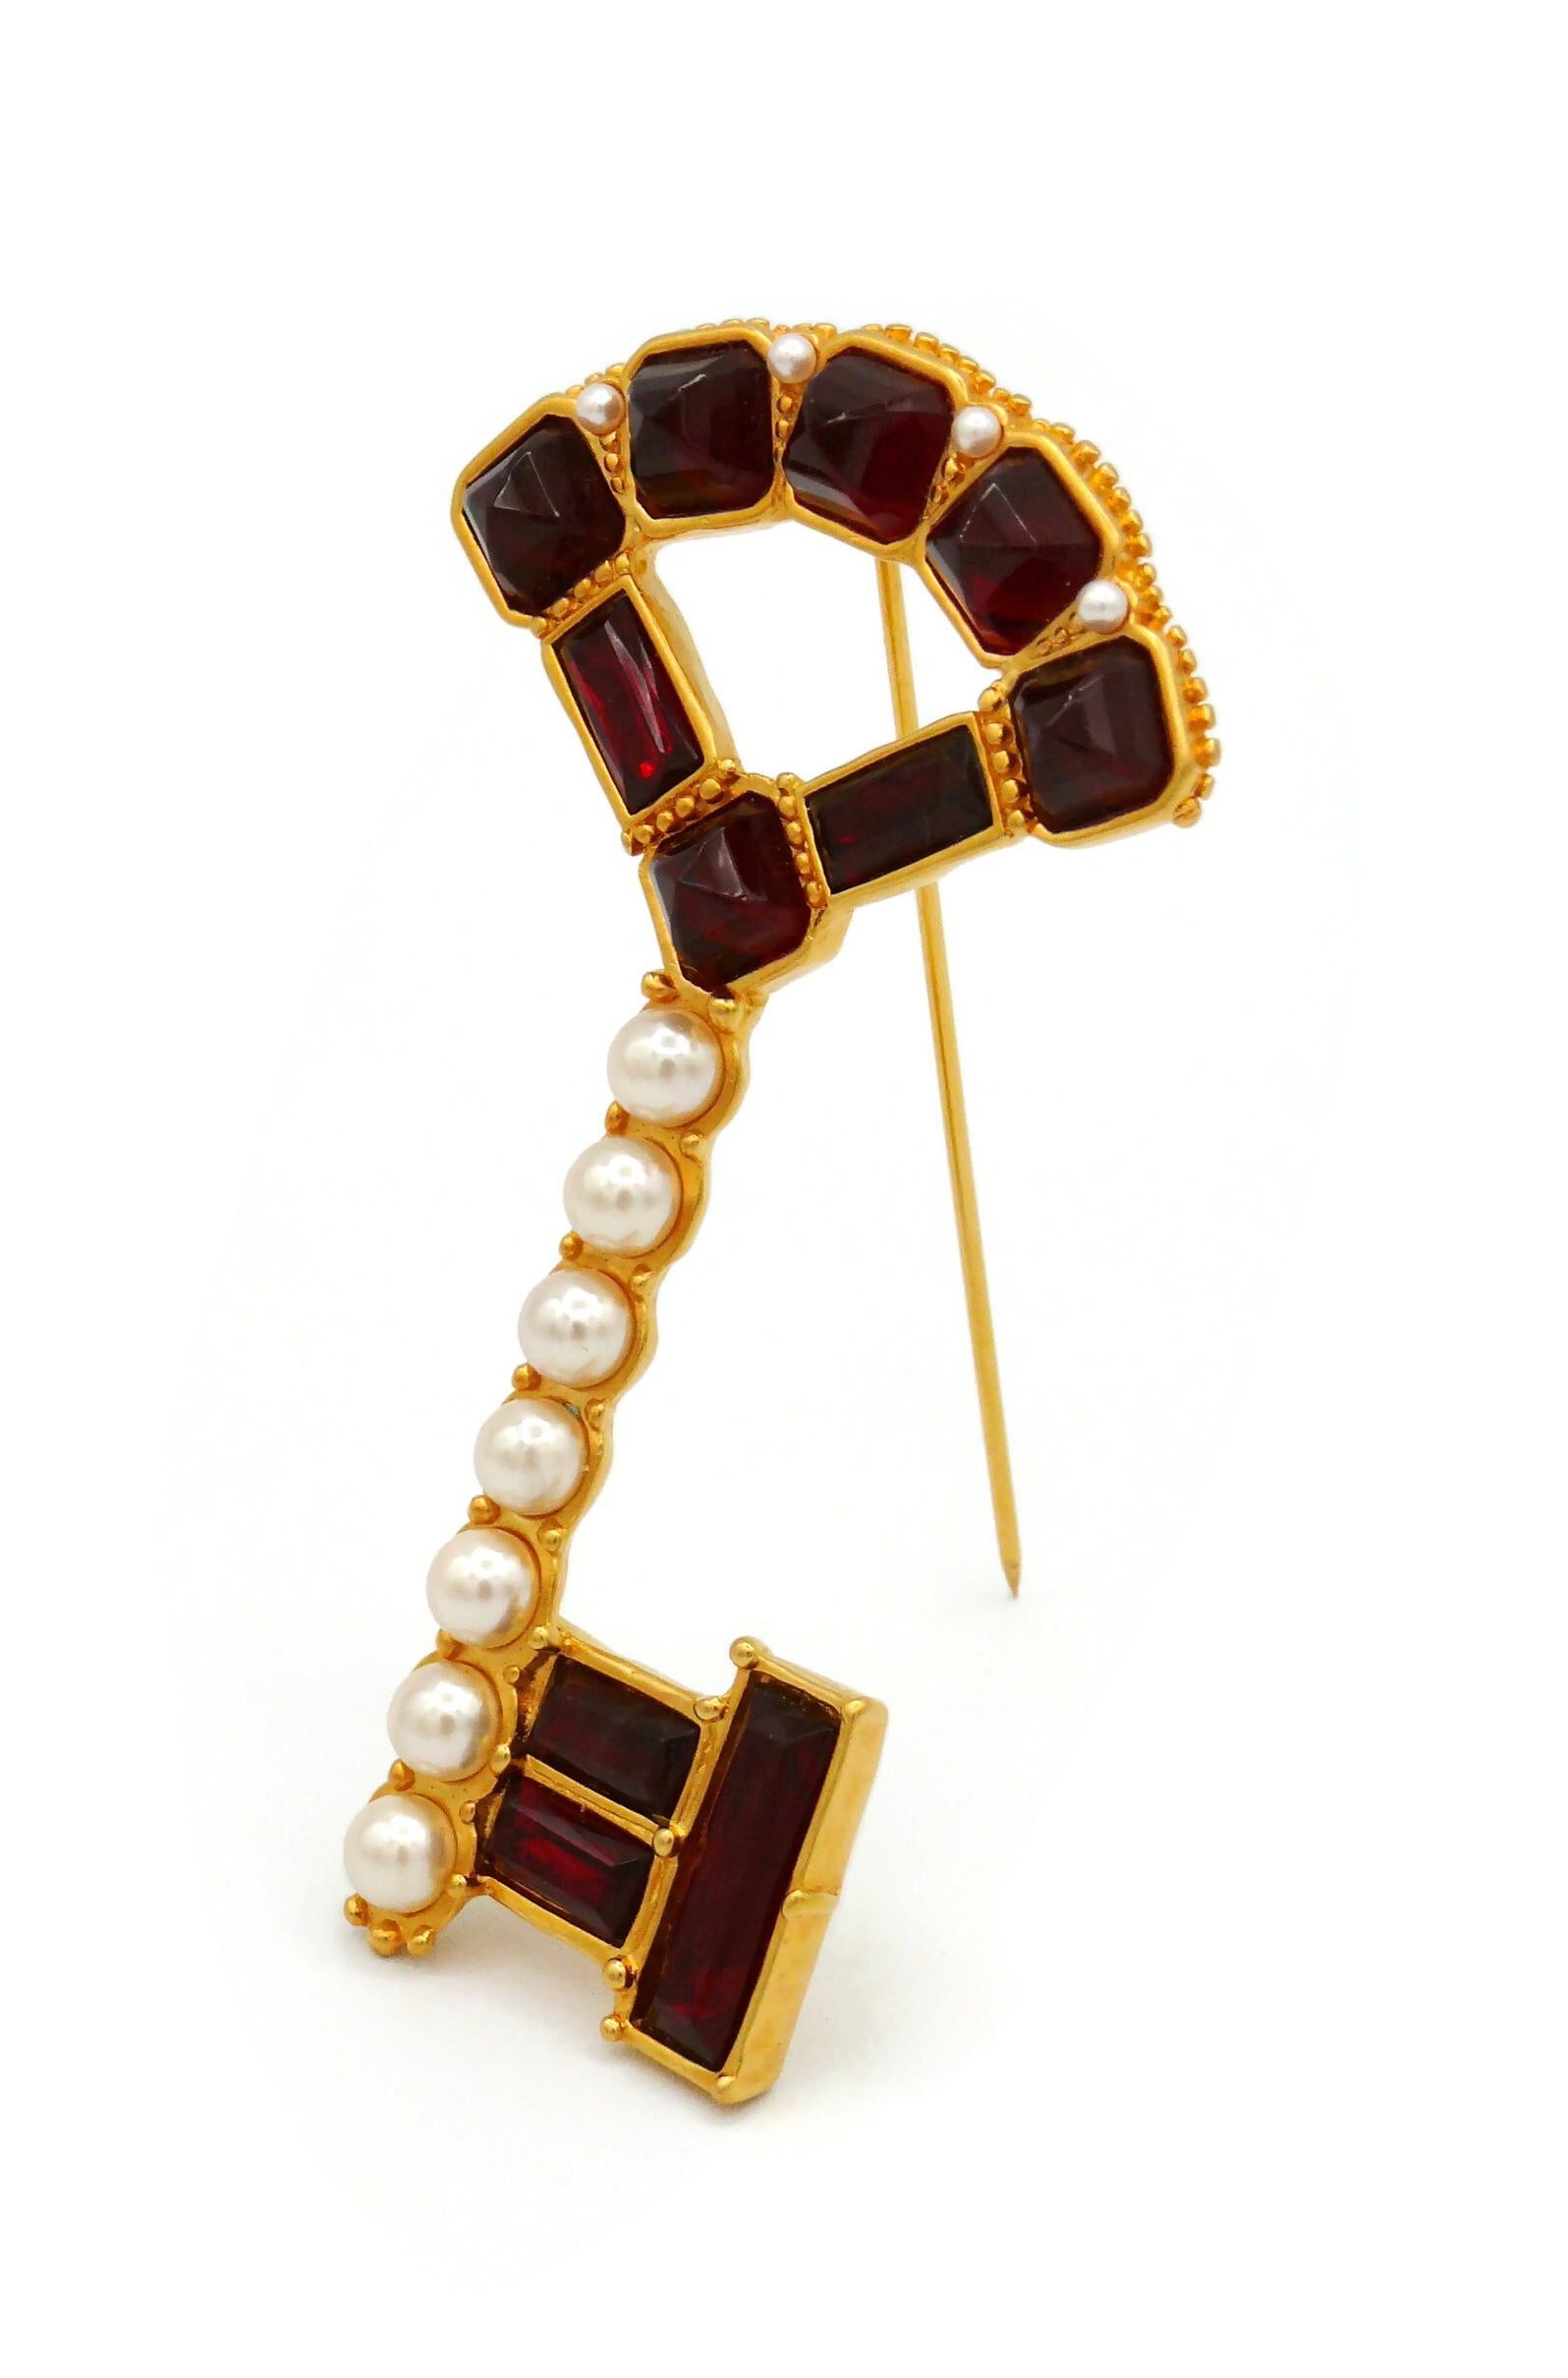 KARL LAGERFELD Vintage Jewelled Key Brooch For Sale 3